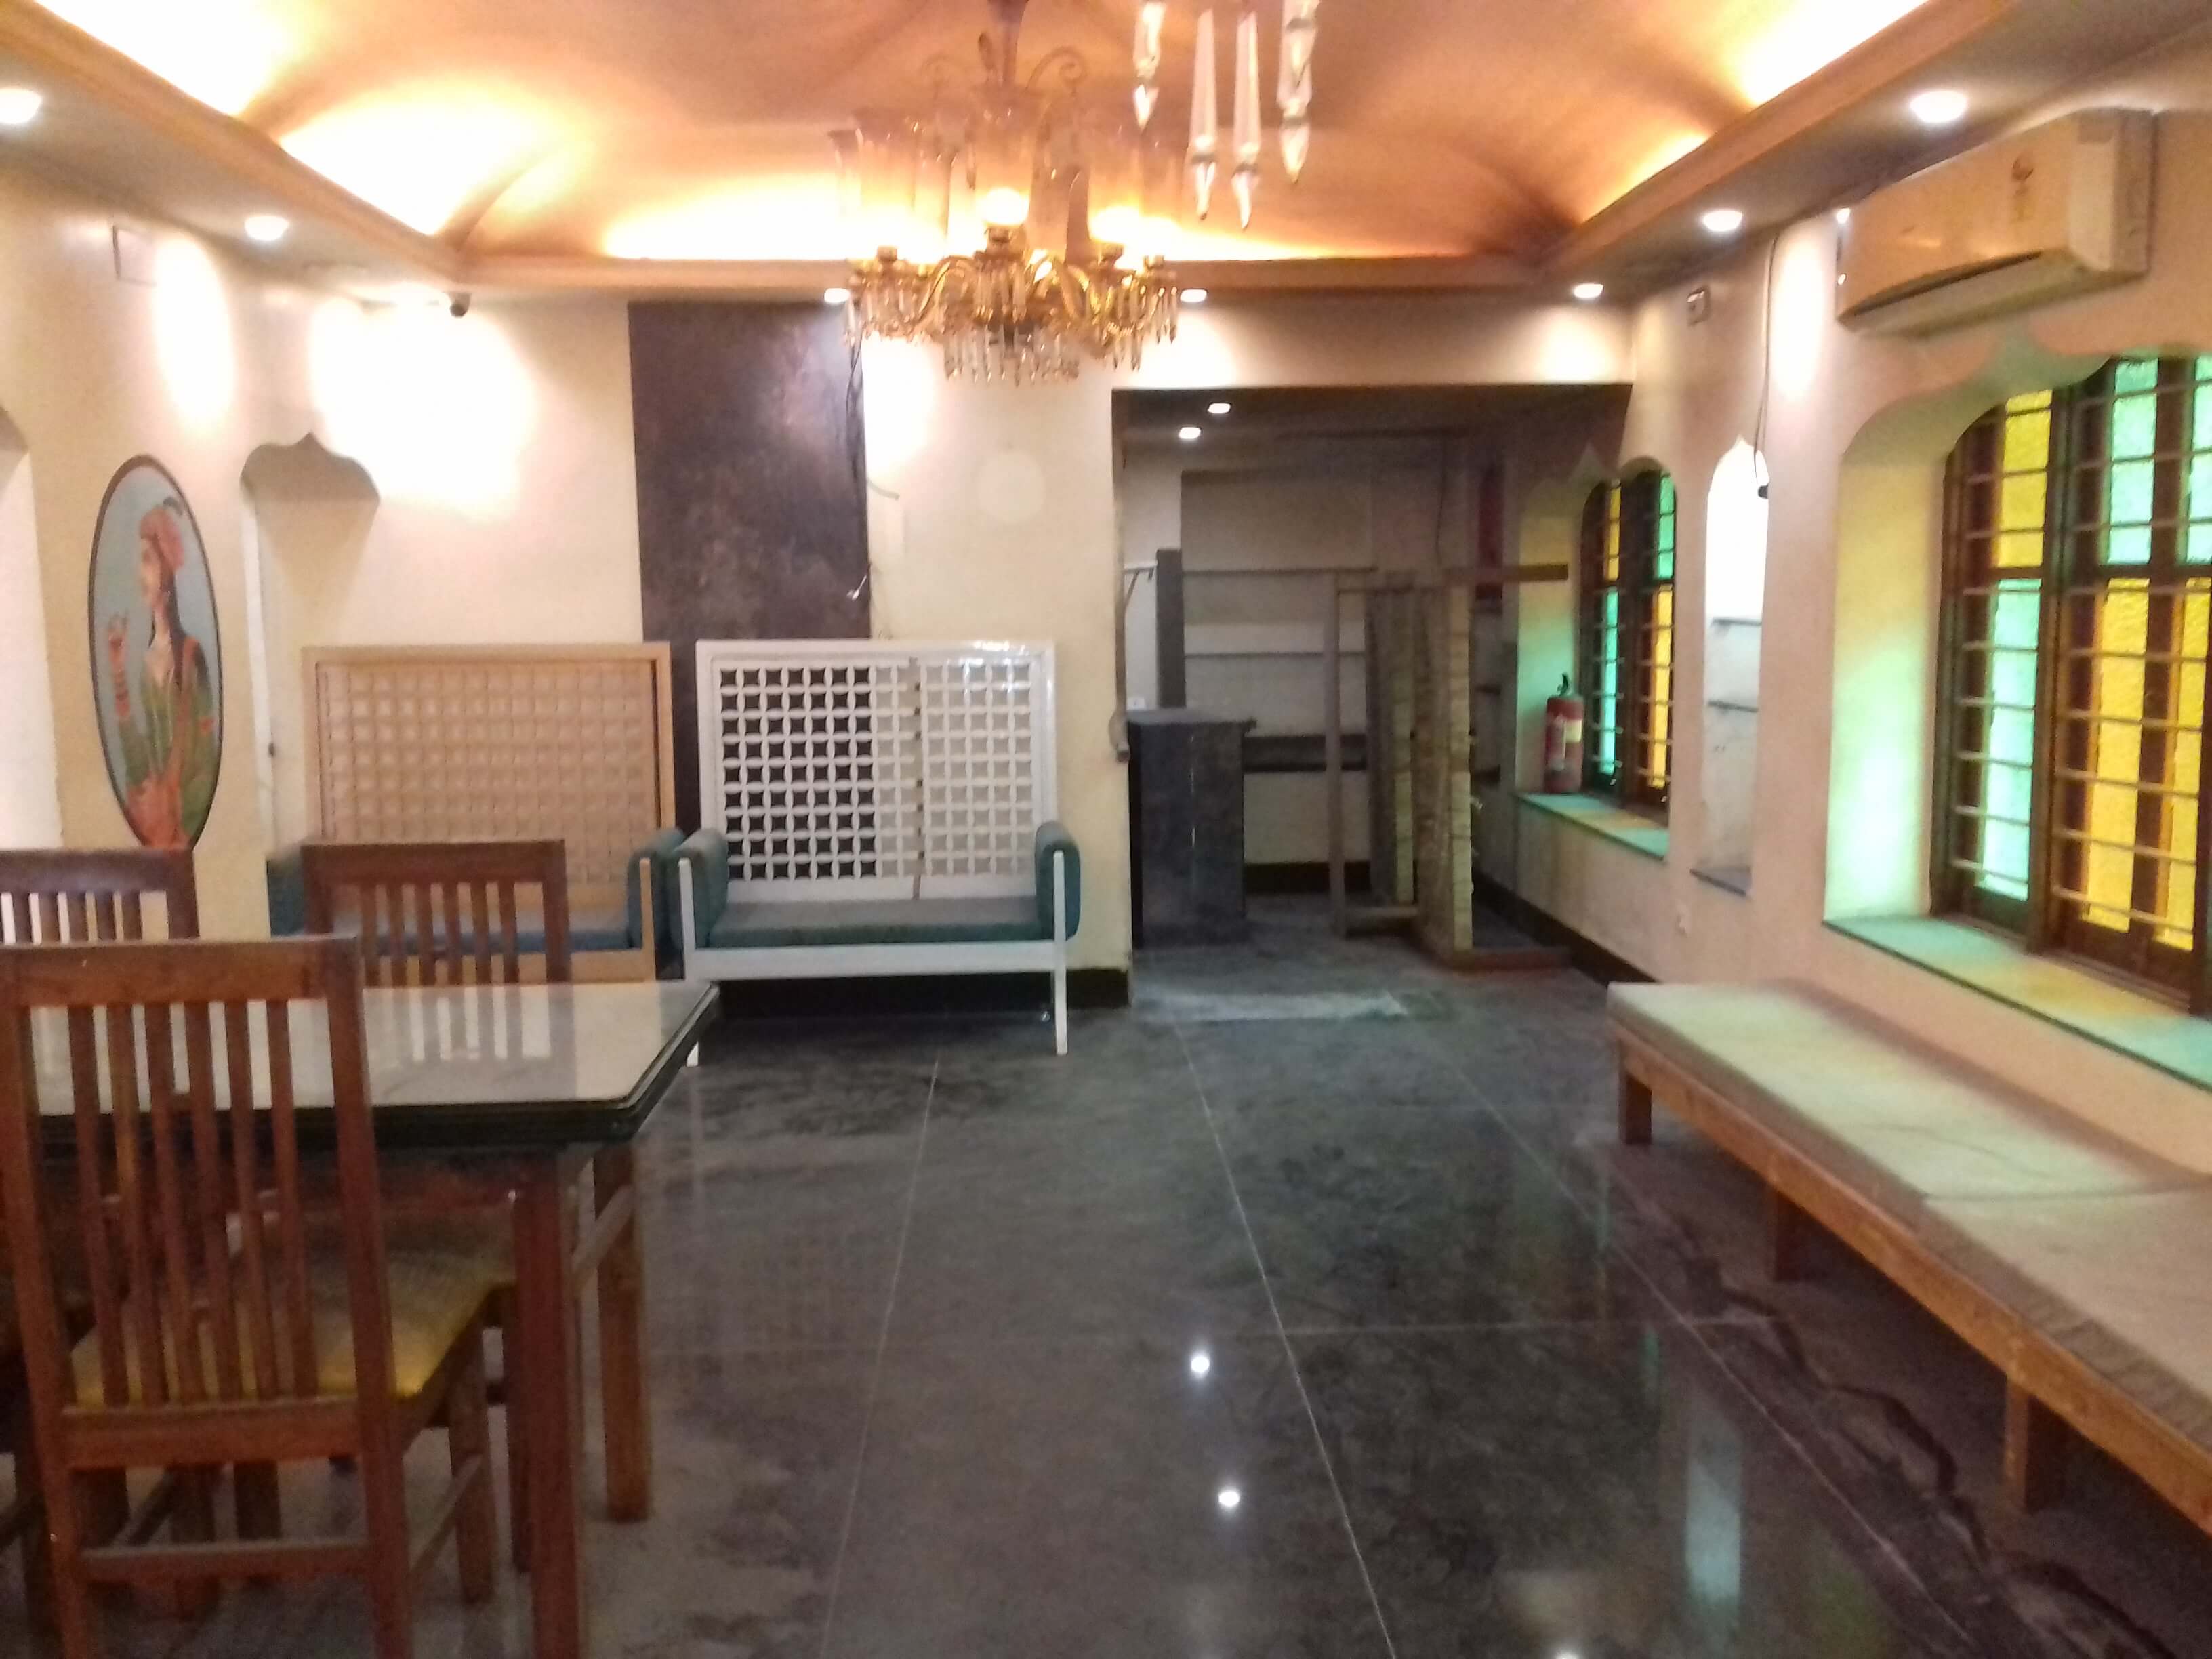 Showroom Space For Rent in Ballygunge Circular Road Kolkata (Id: 6710) 